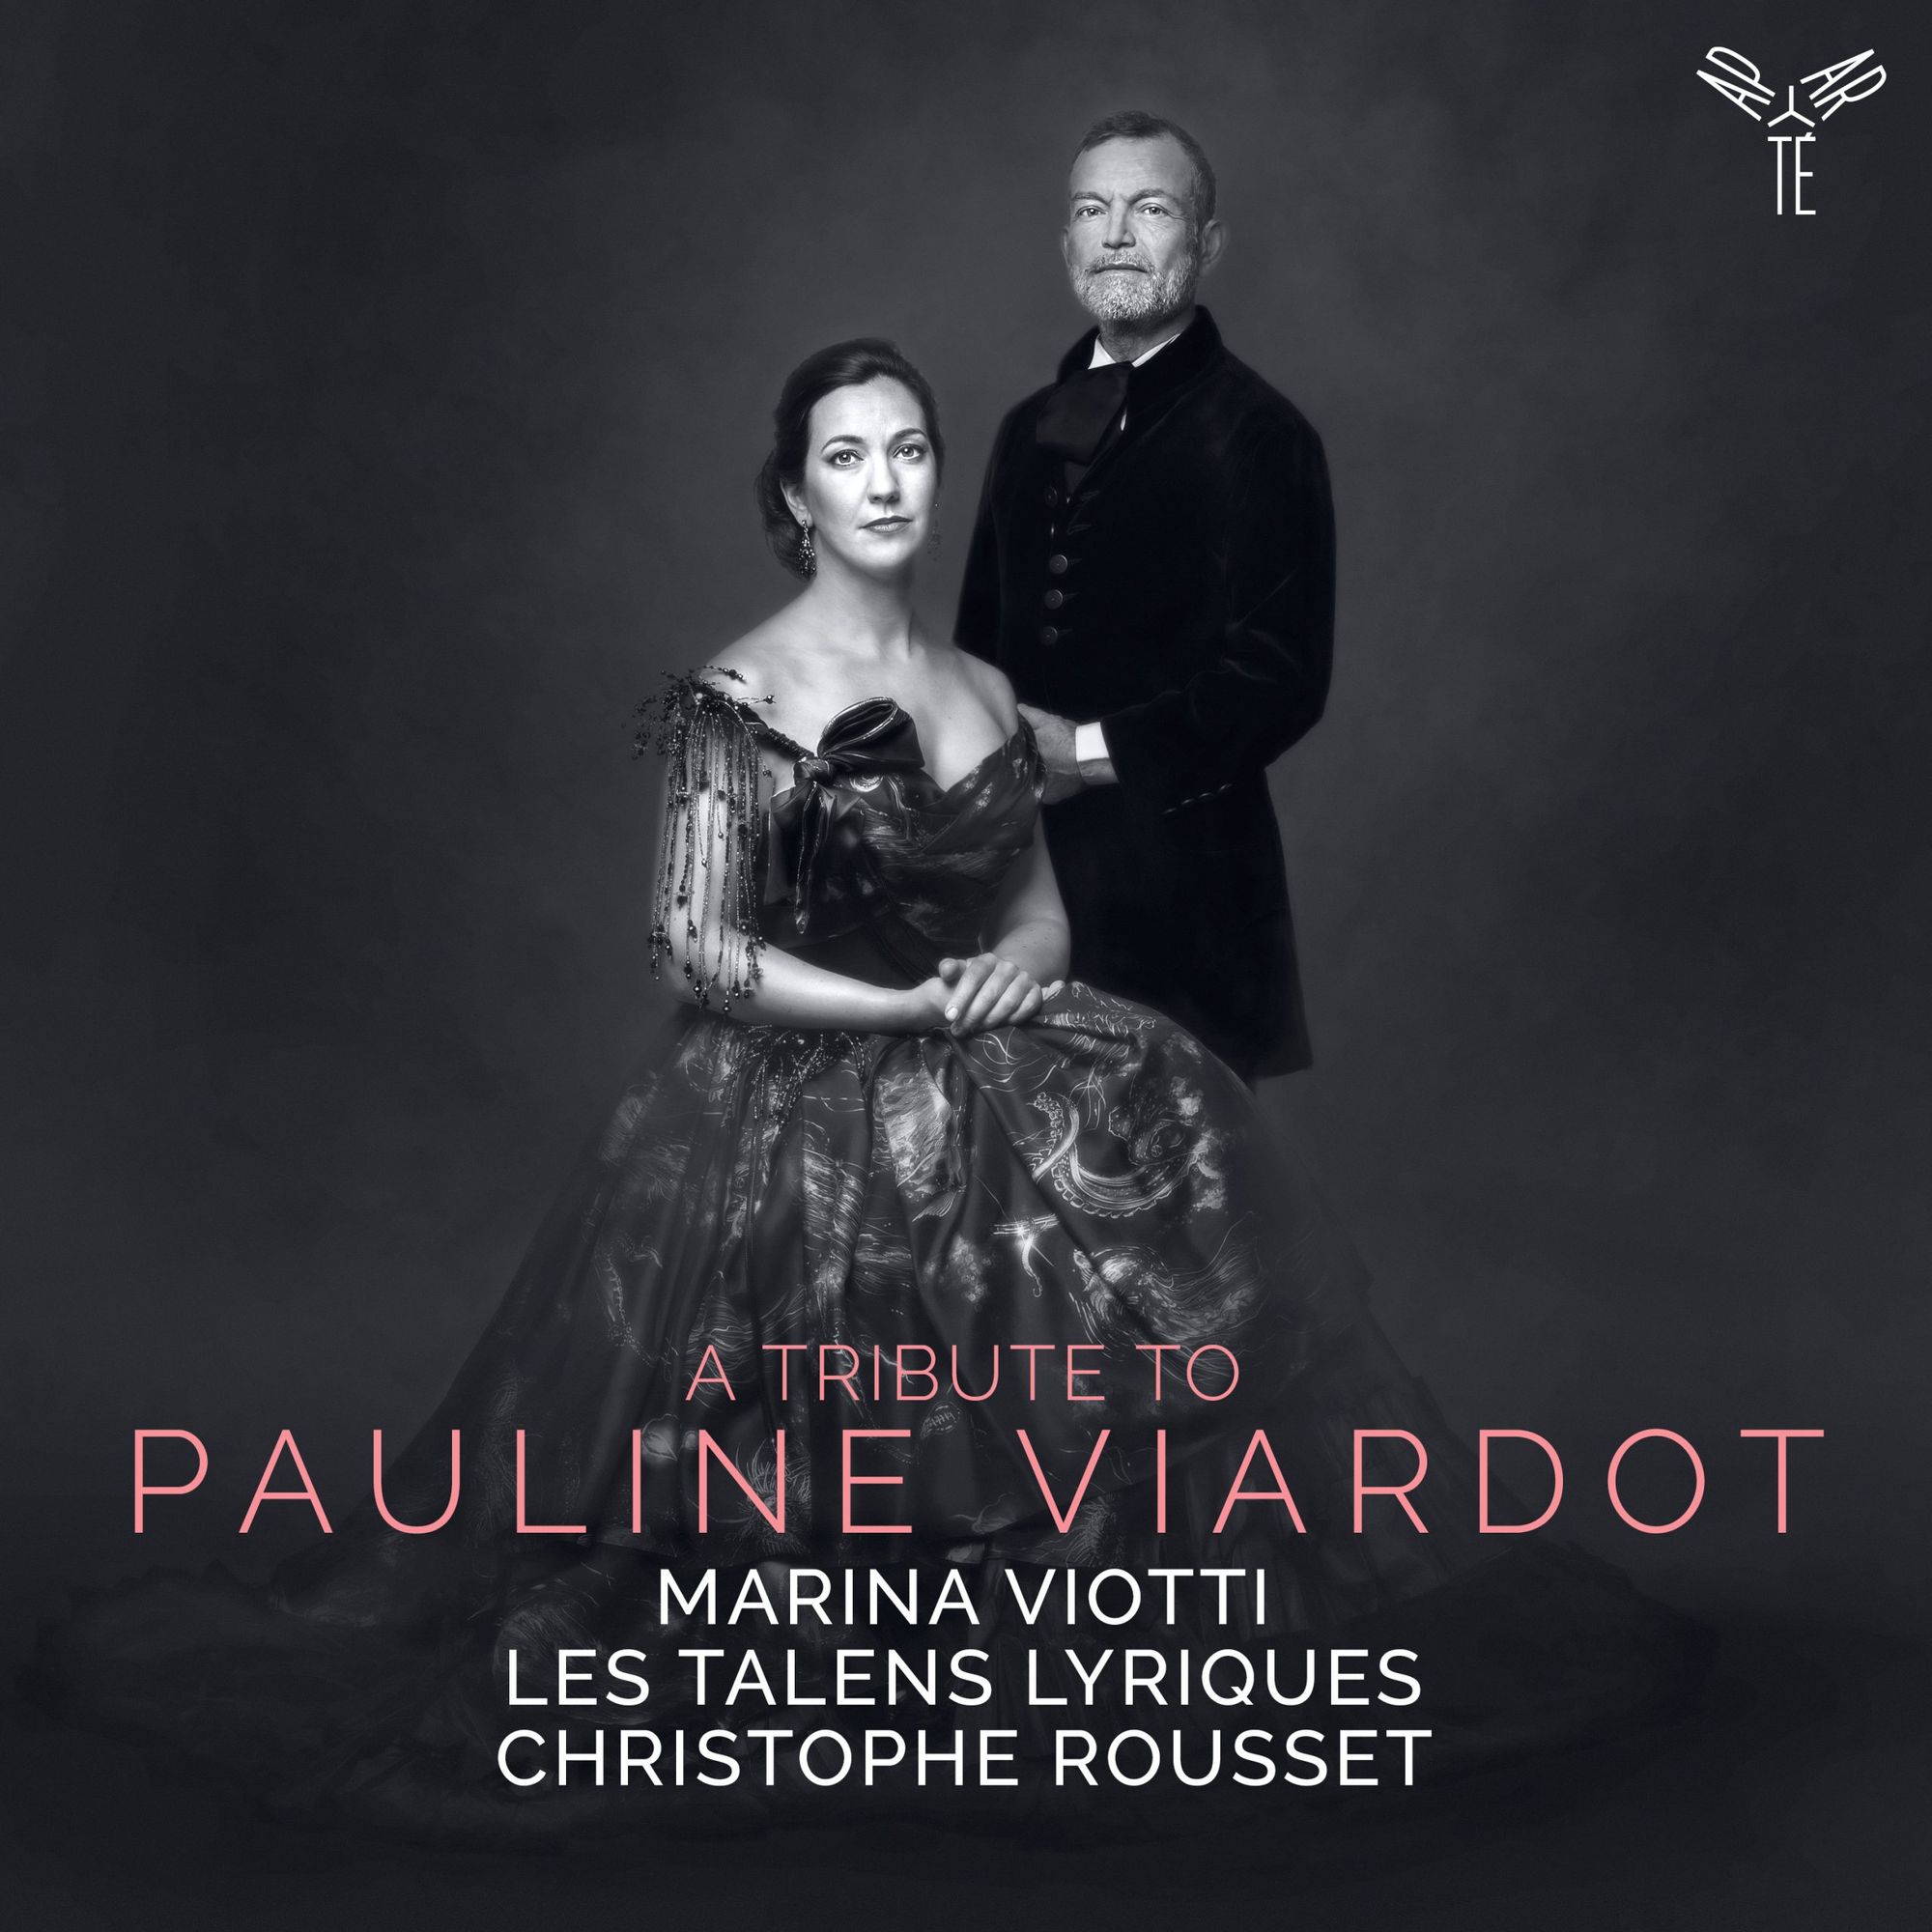 Marina Viotti and Christophe Rousset's stunning tribute to Pauline Viardot